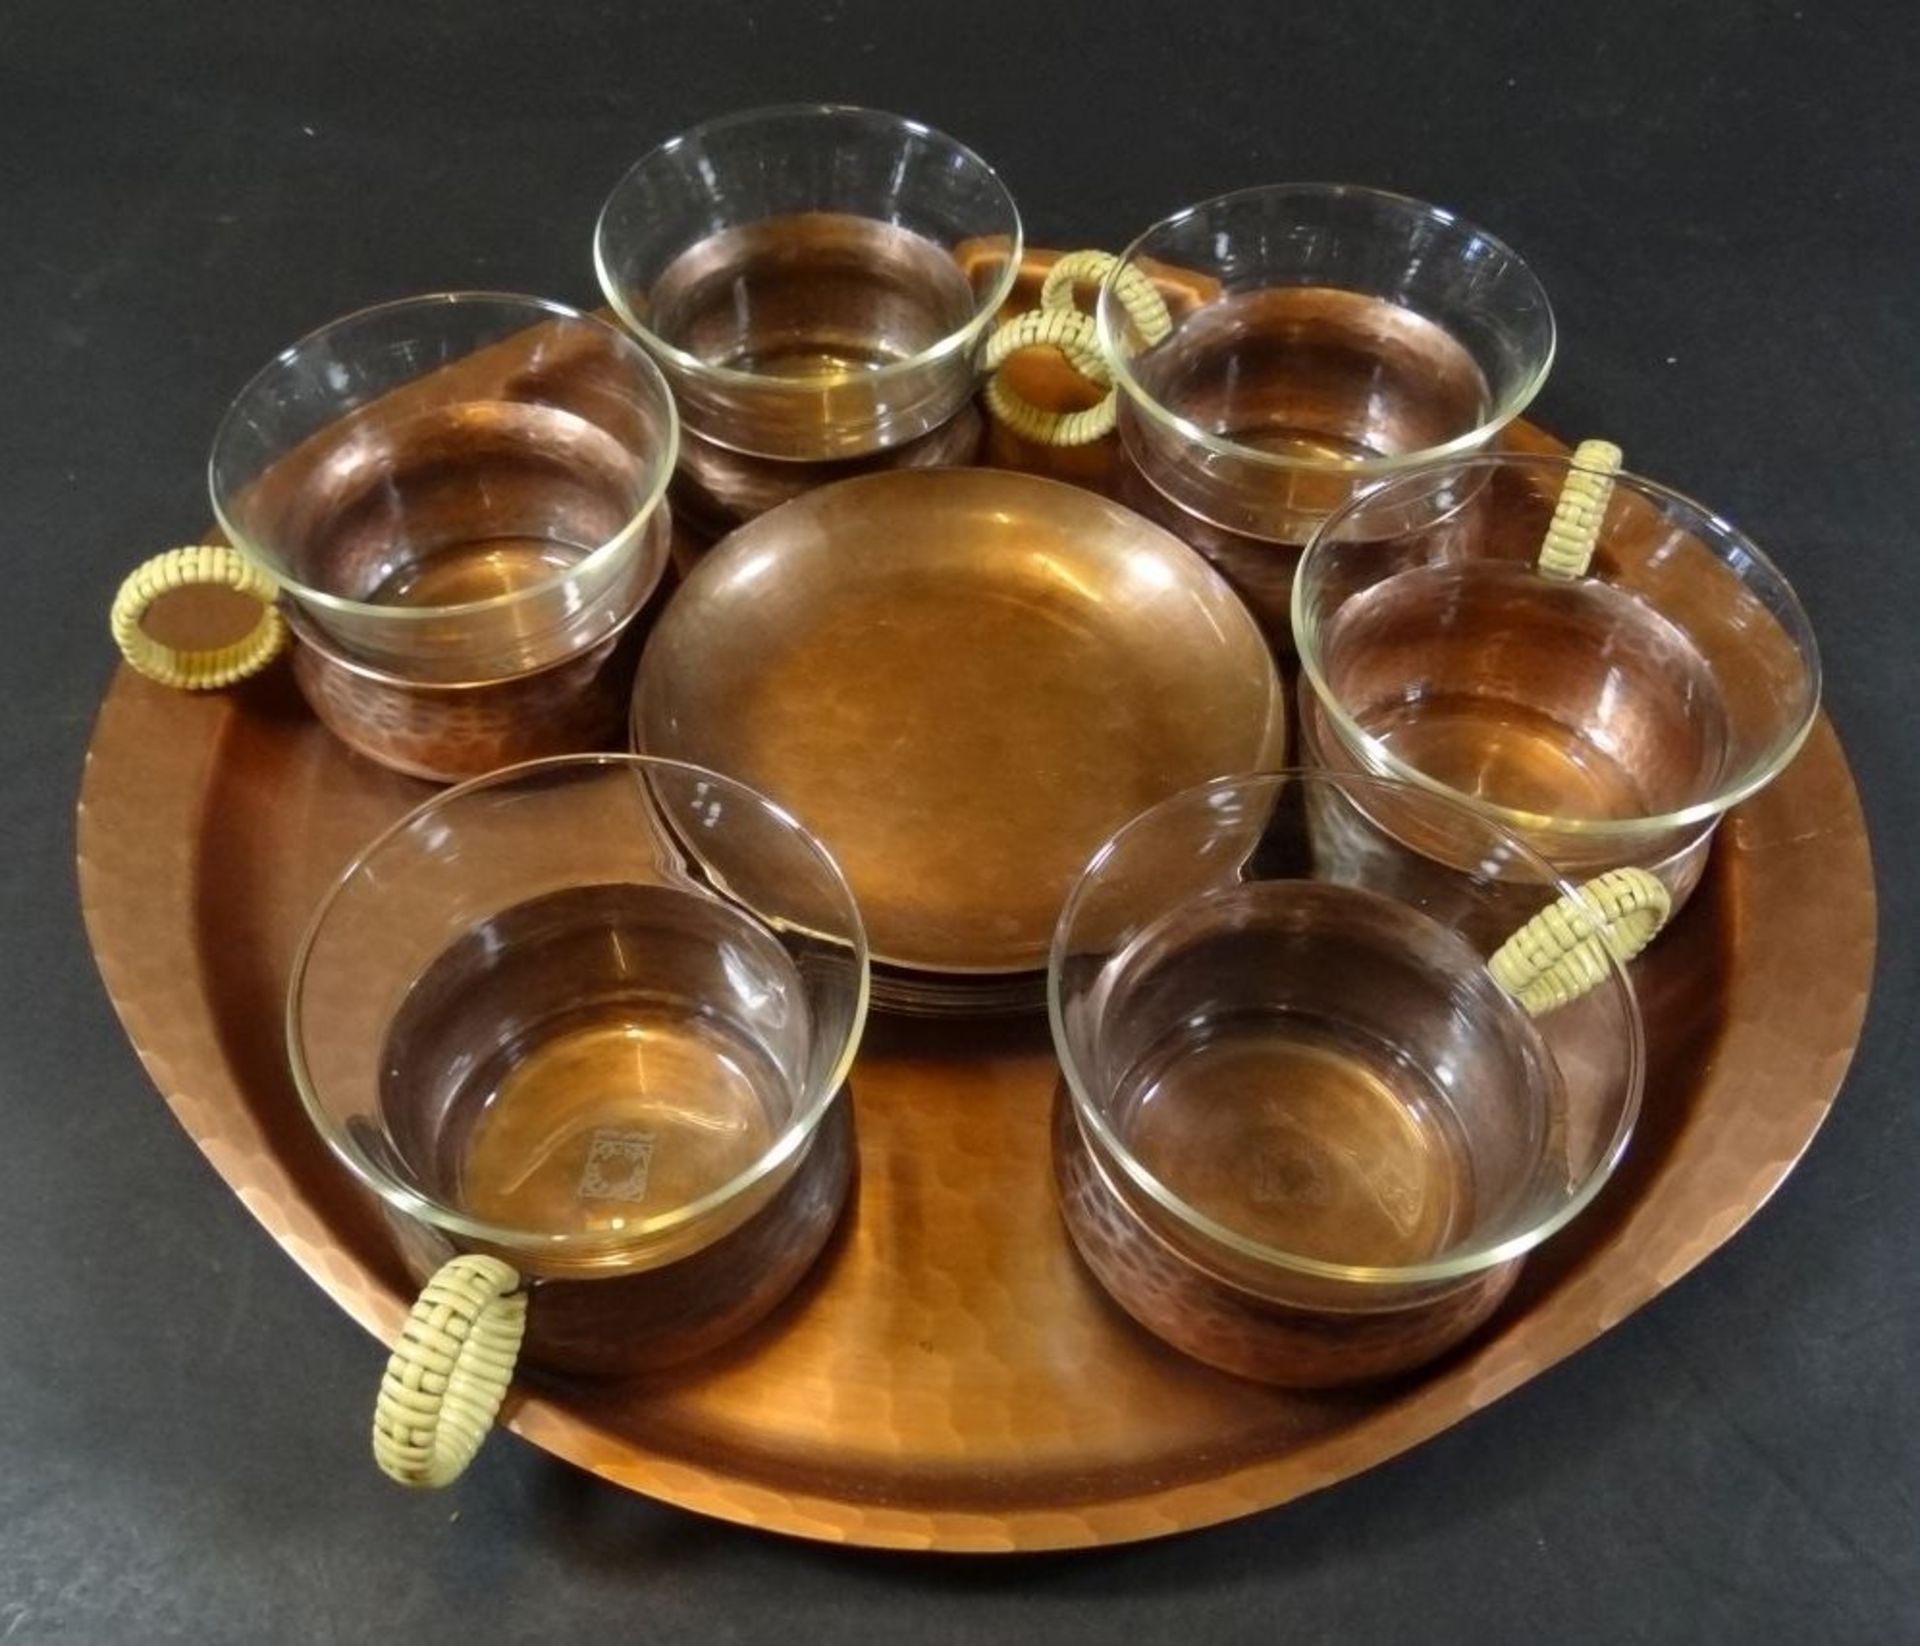 rundes Kupfer-Tablett mit 6 Teeglashalter und Teegläser "Zint" Handarbeit, Gläser Jenaer Glas, D-33